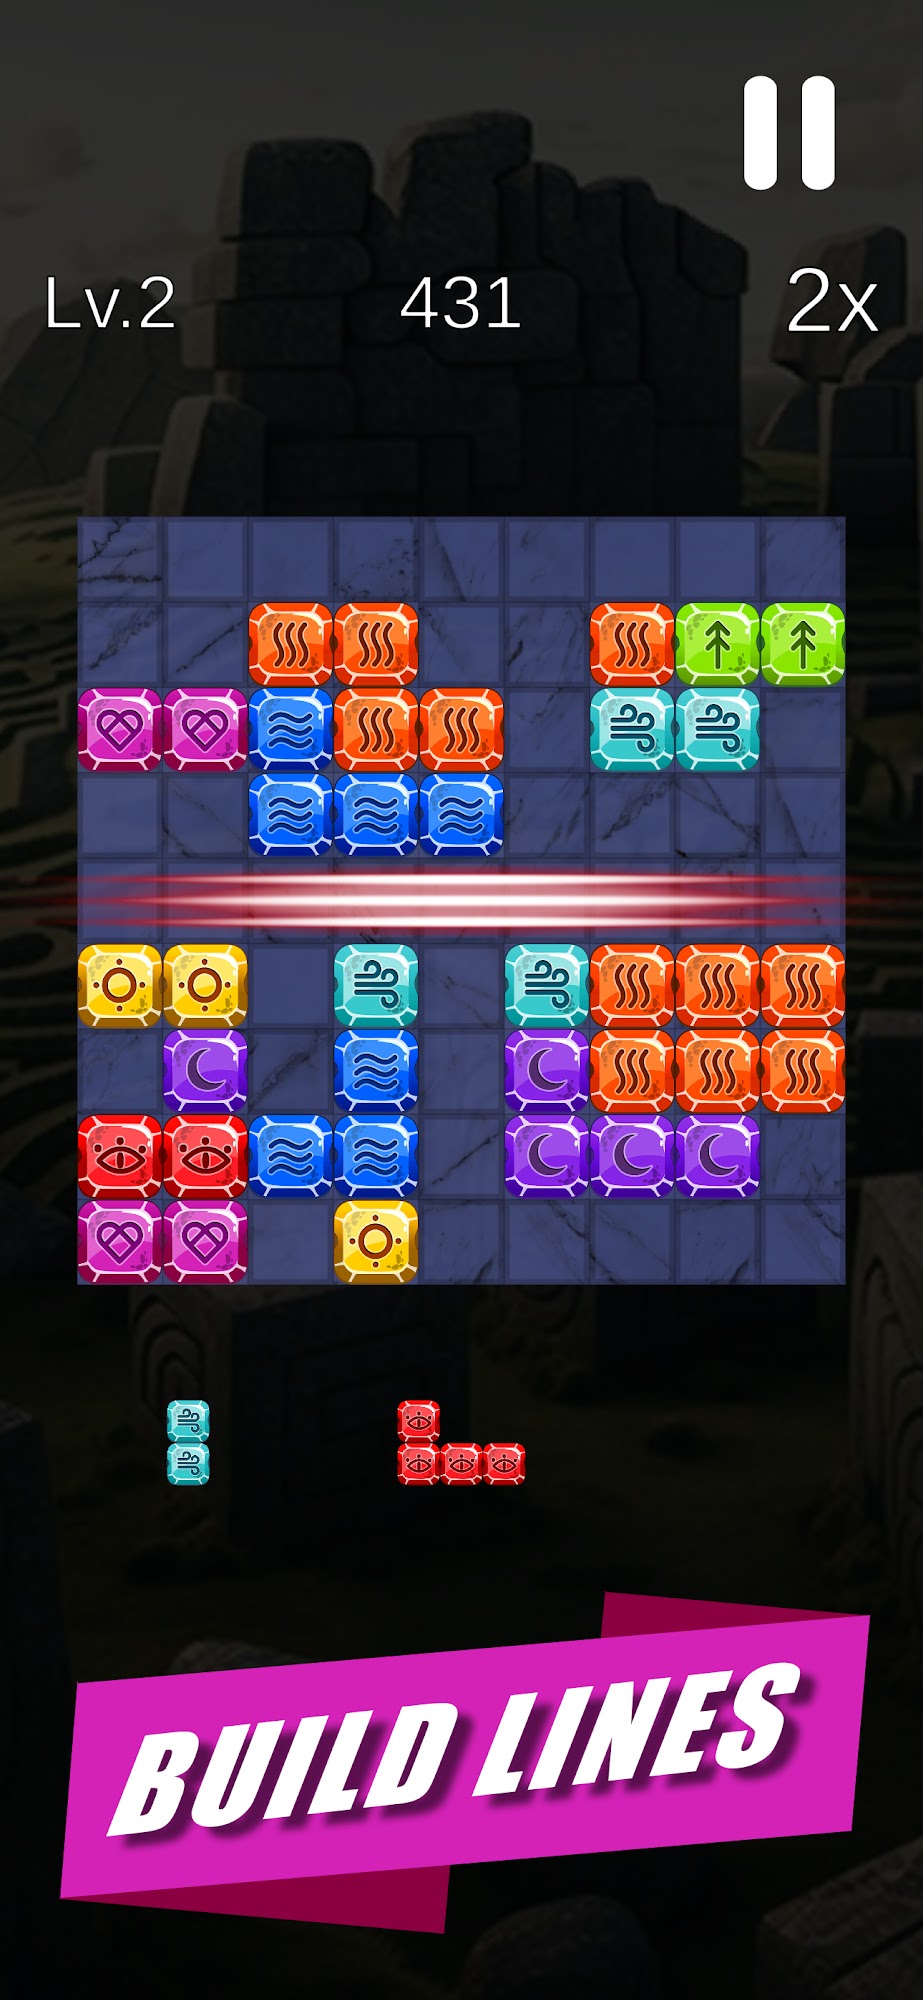 Mystic Burst - Android game screenshots.